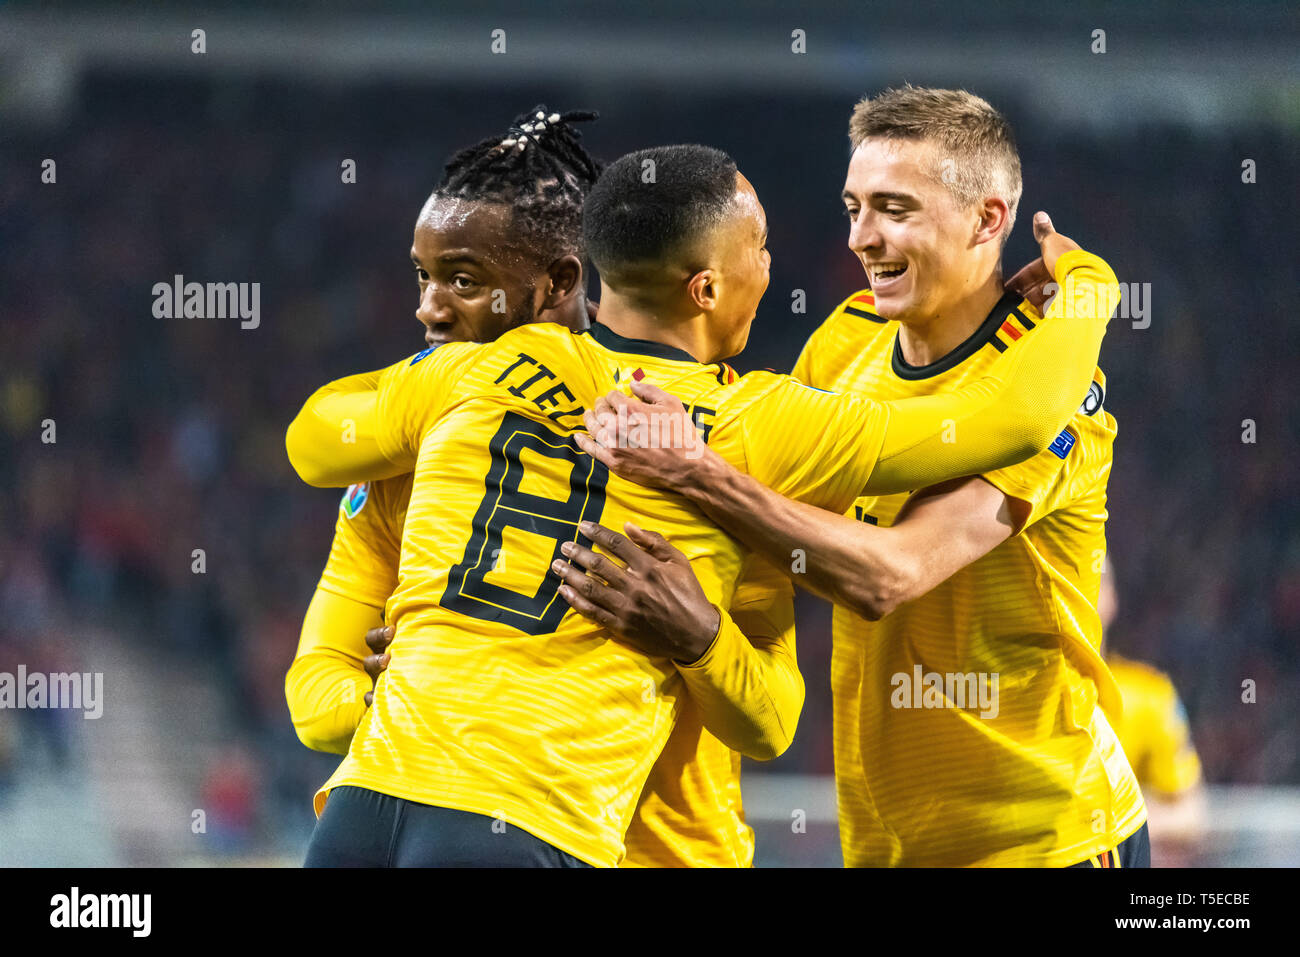 Uefa football hug hi-res stock photography and images - Alamy